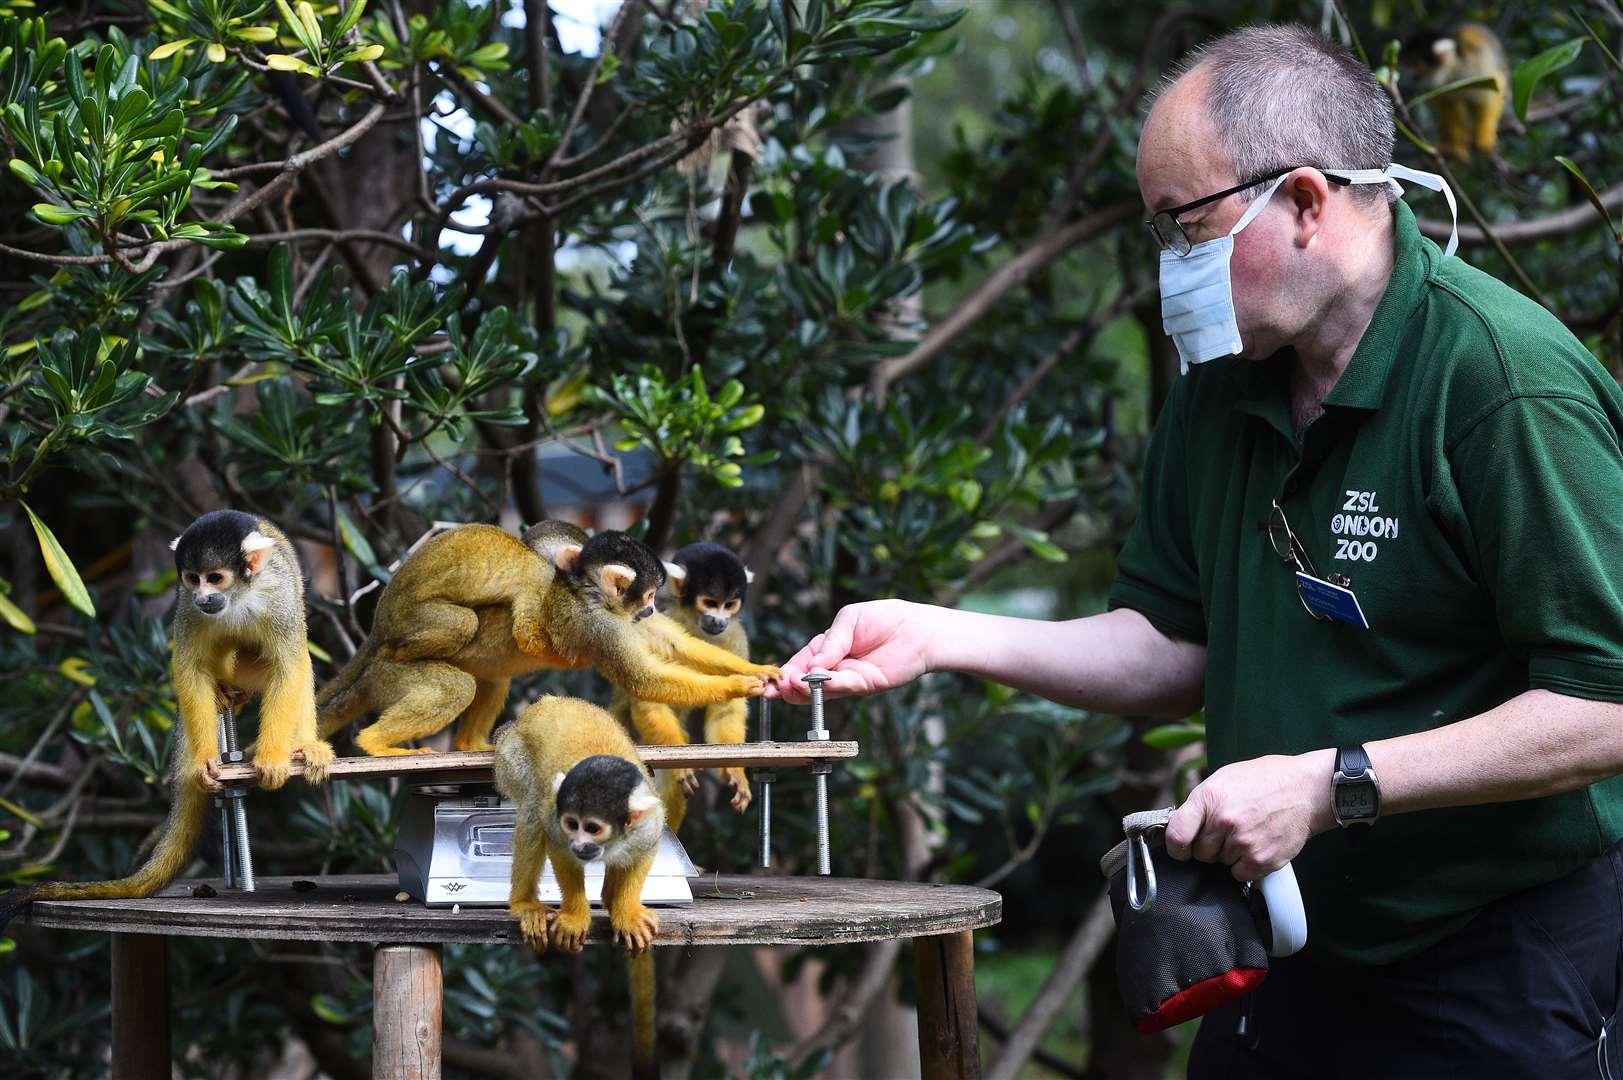 Senior keeper Tony Cholerton weighs squirrel monkeys (Kirsty O’Connor/PA)